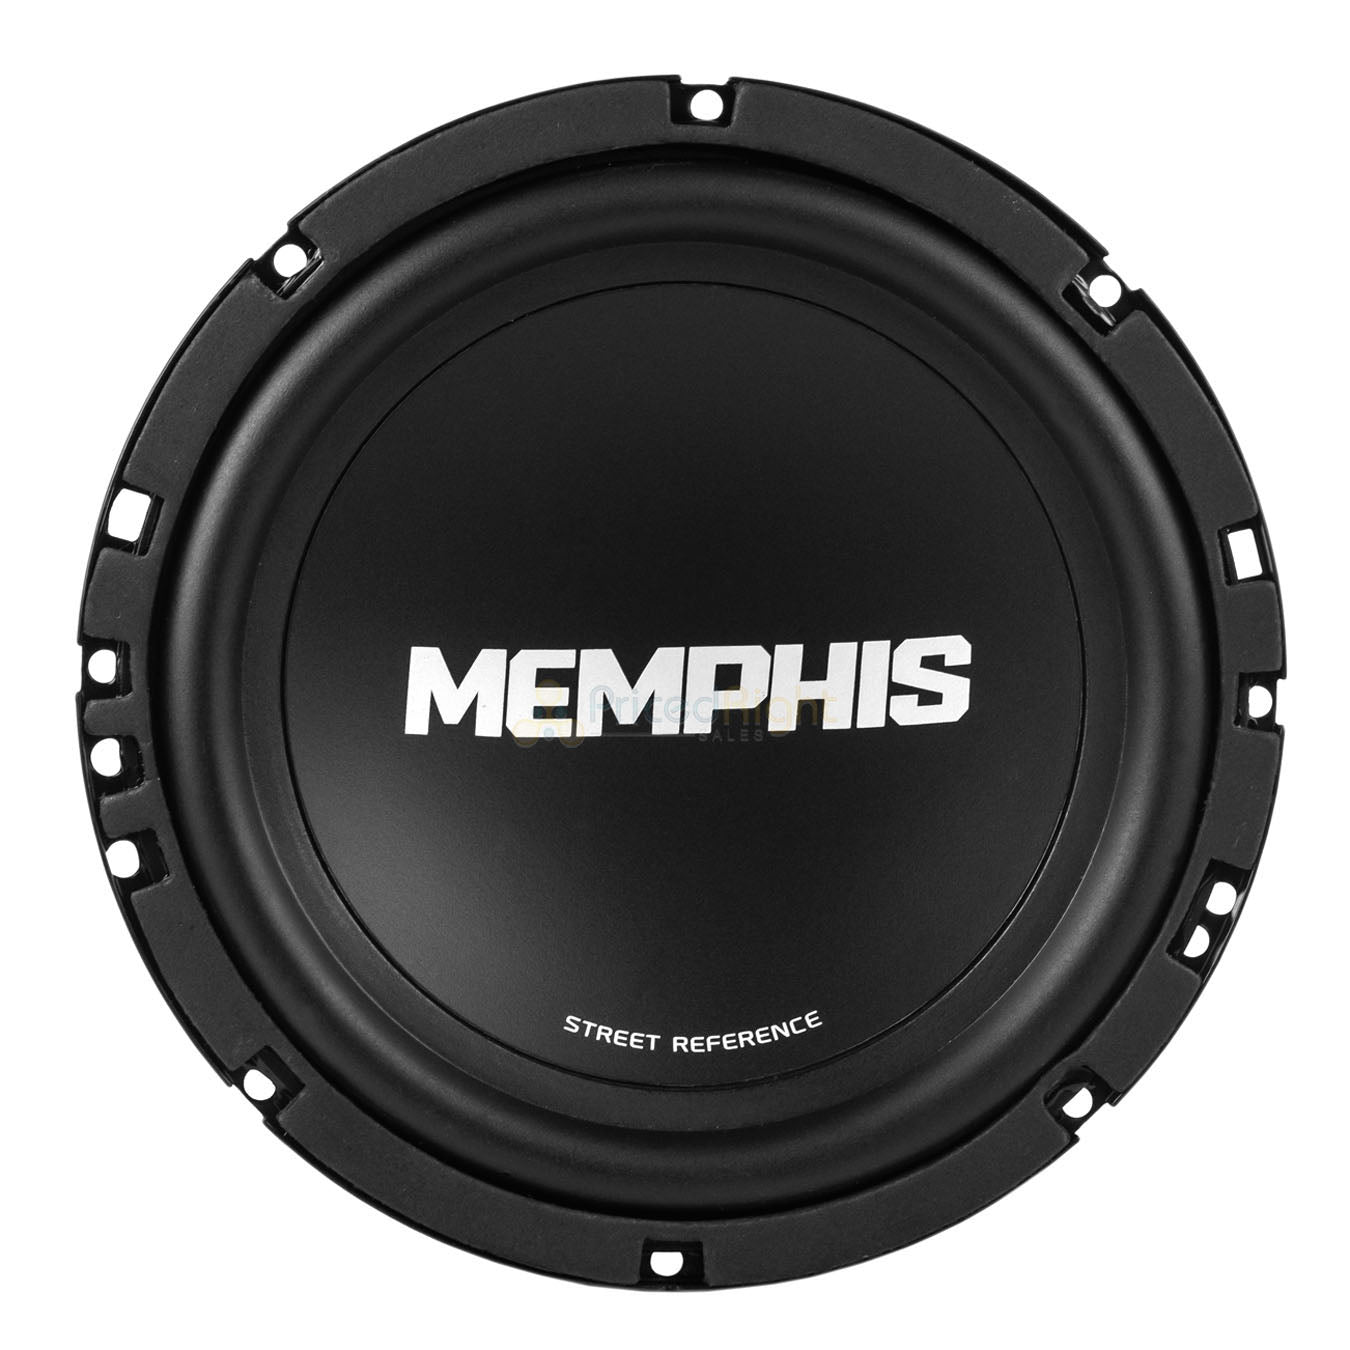 Memphis Audio 6.5" Component Speaker System Car Audio OEM Stereo SRX60C Pair